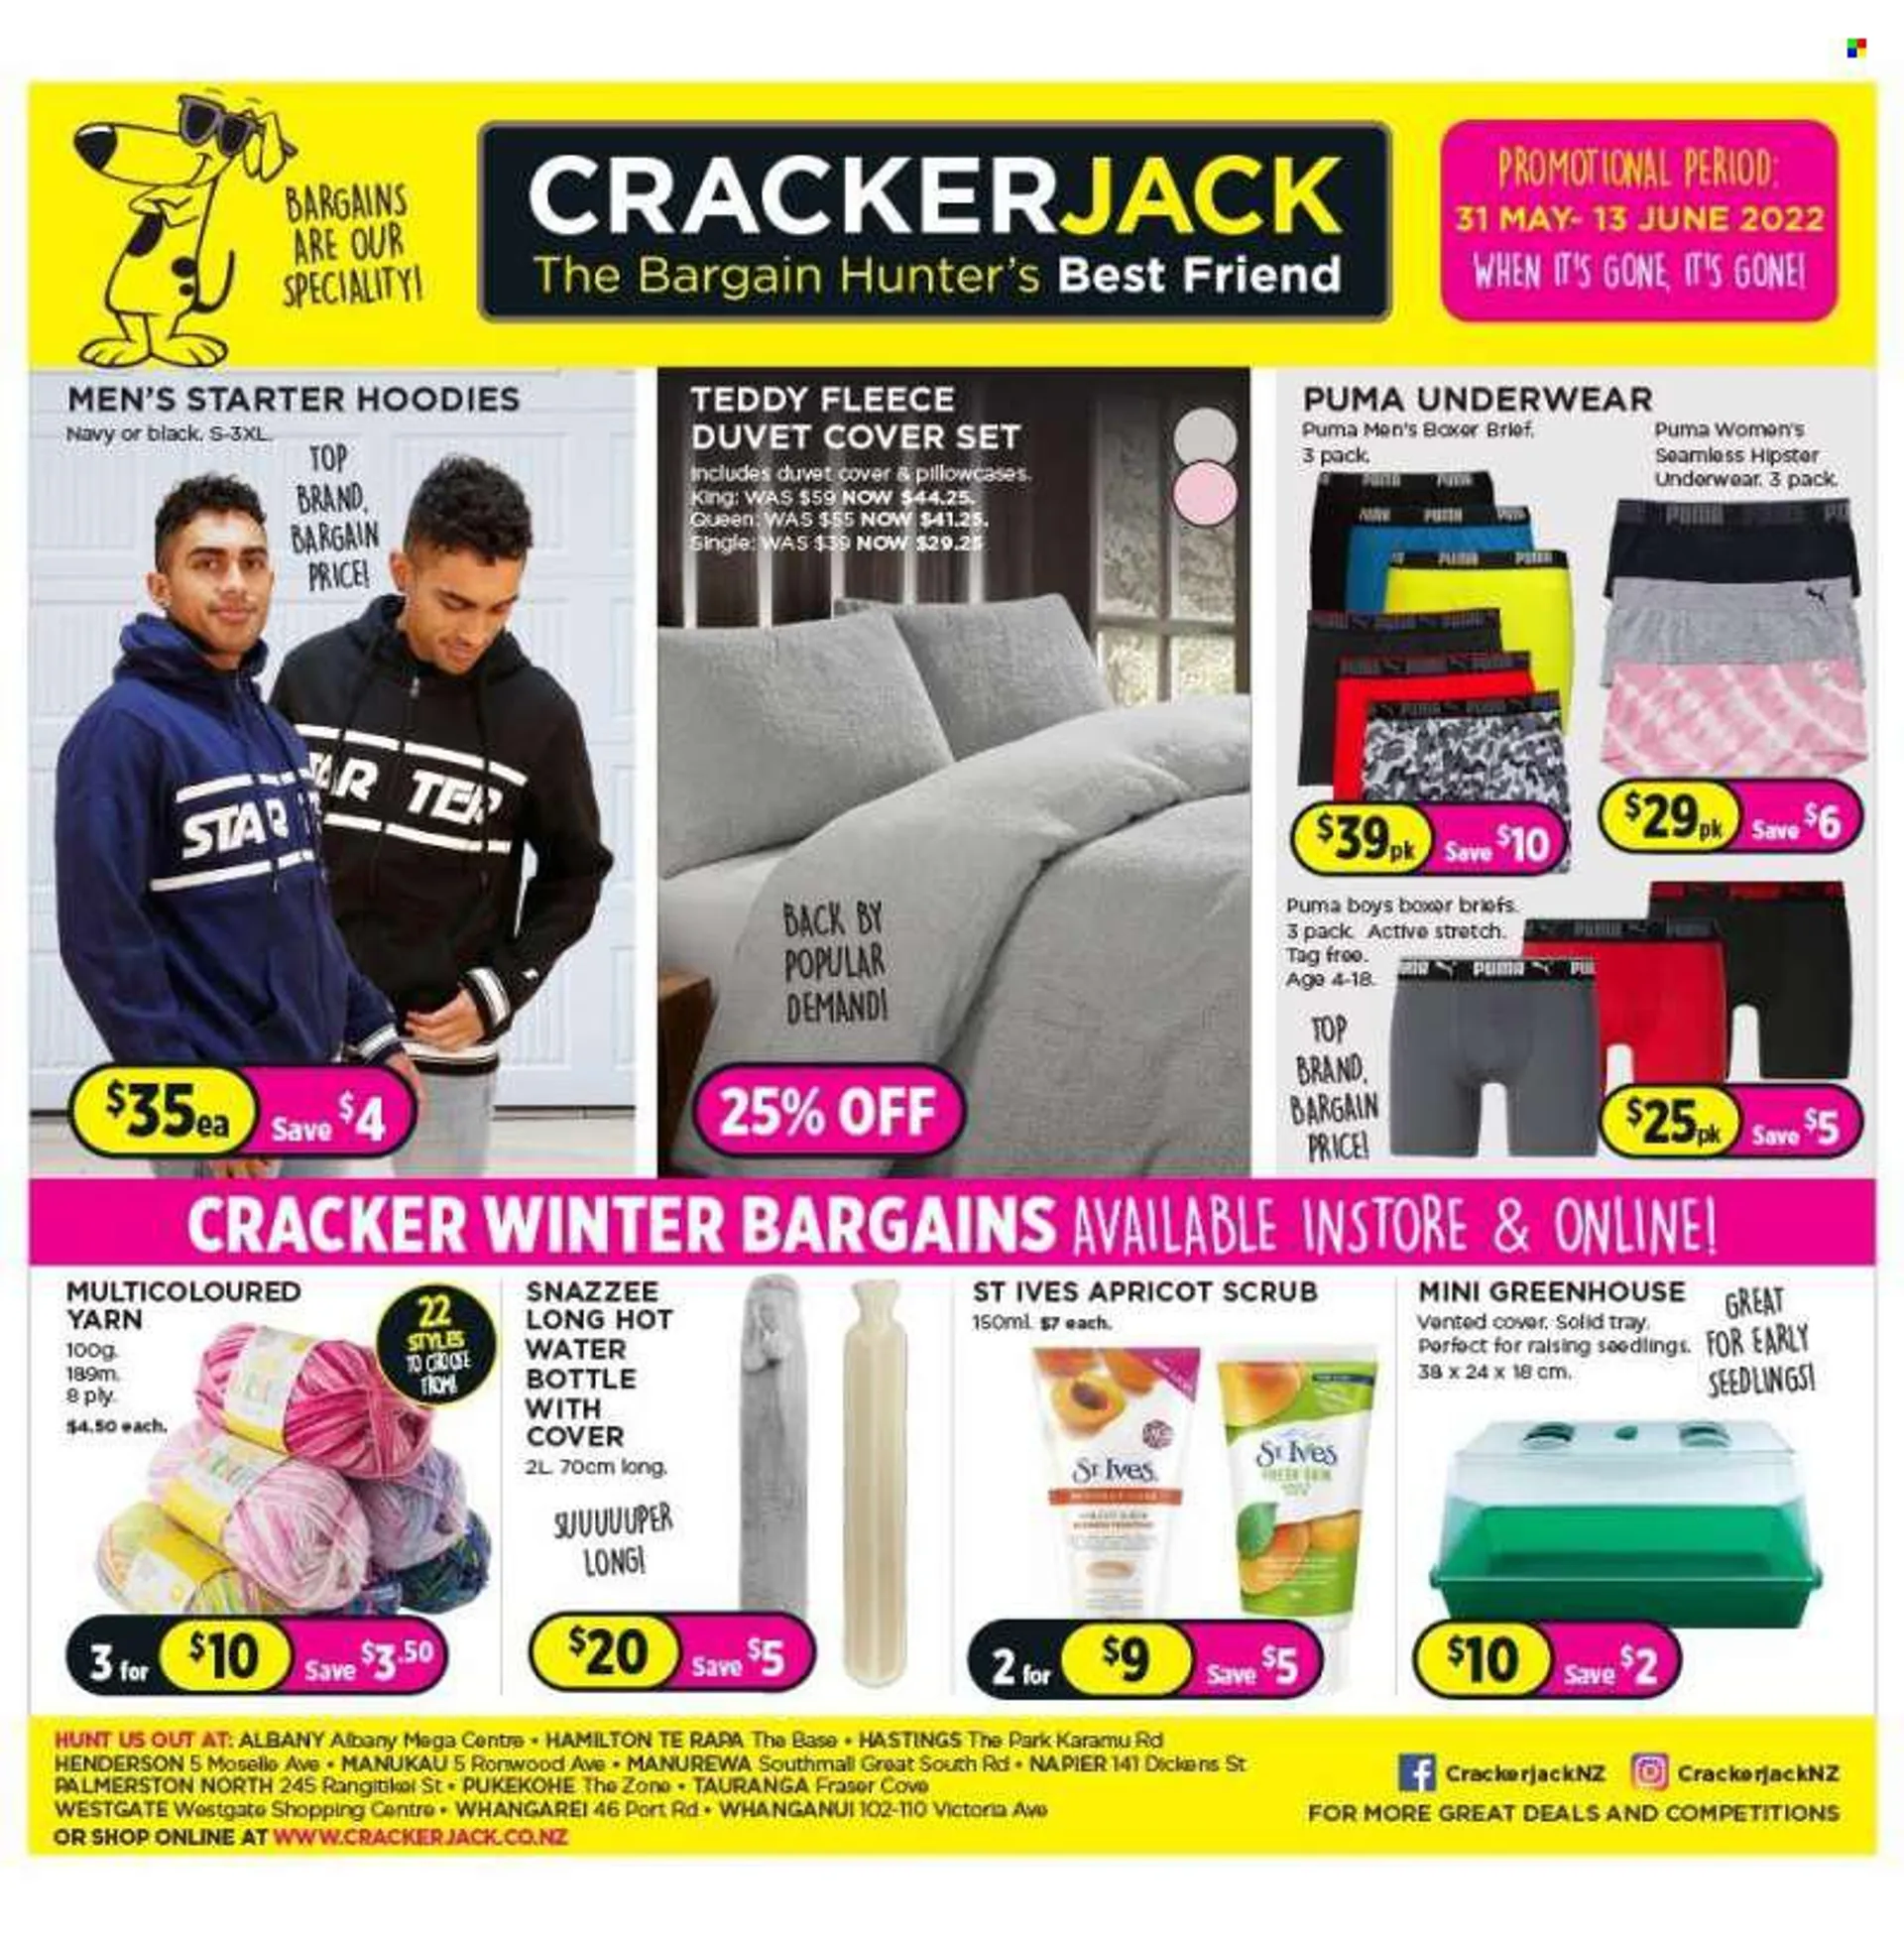 Crackerjack mailer - 31.05.2022 - 13.06.2022. - 31 May 13 June 2022 - Page 1